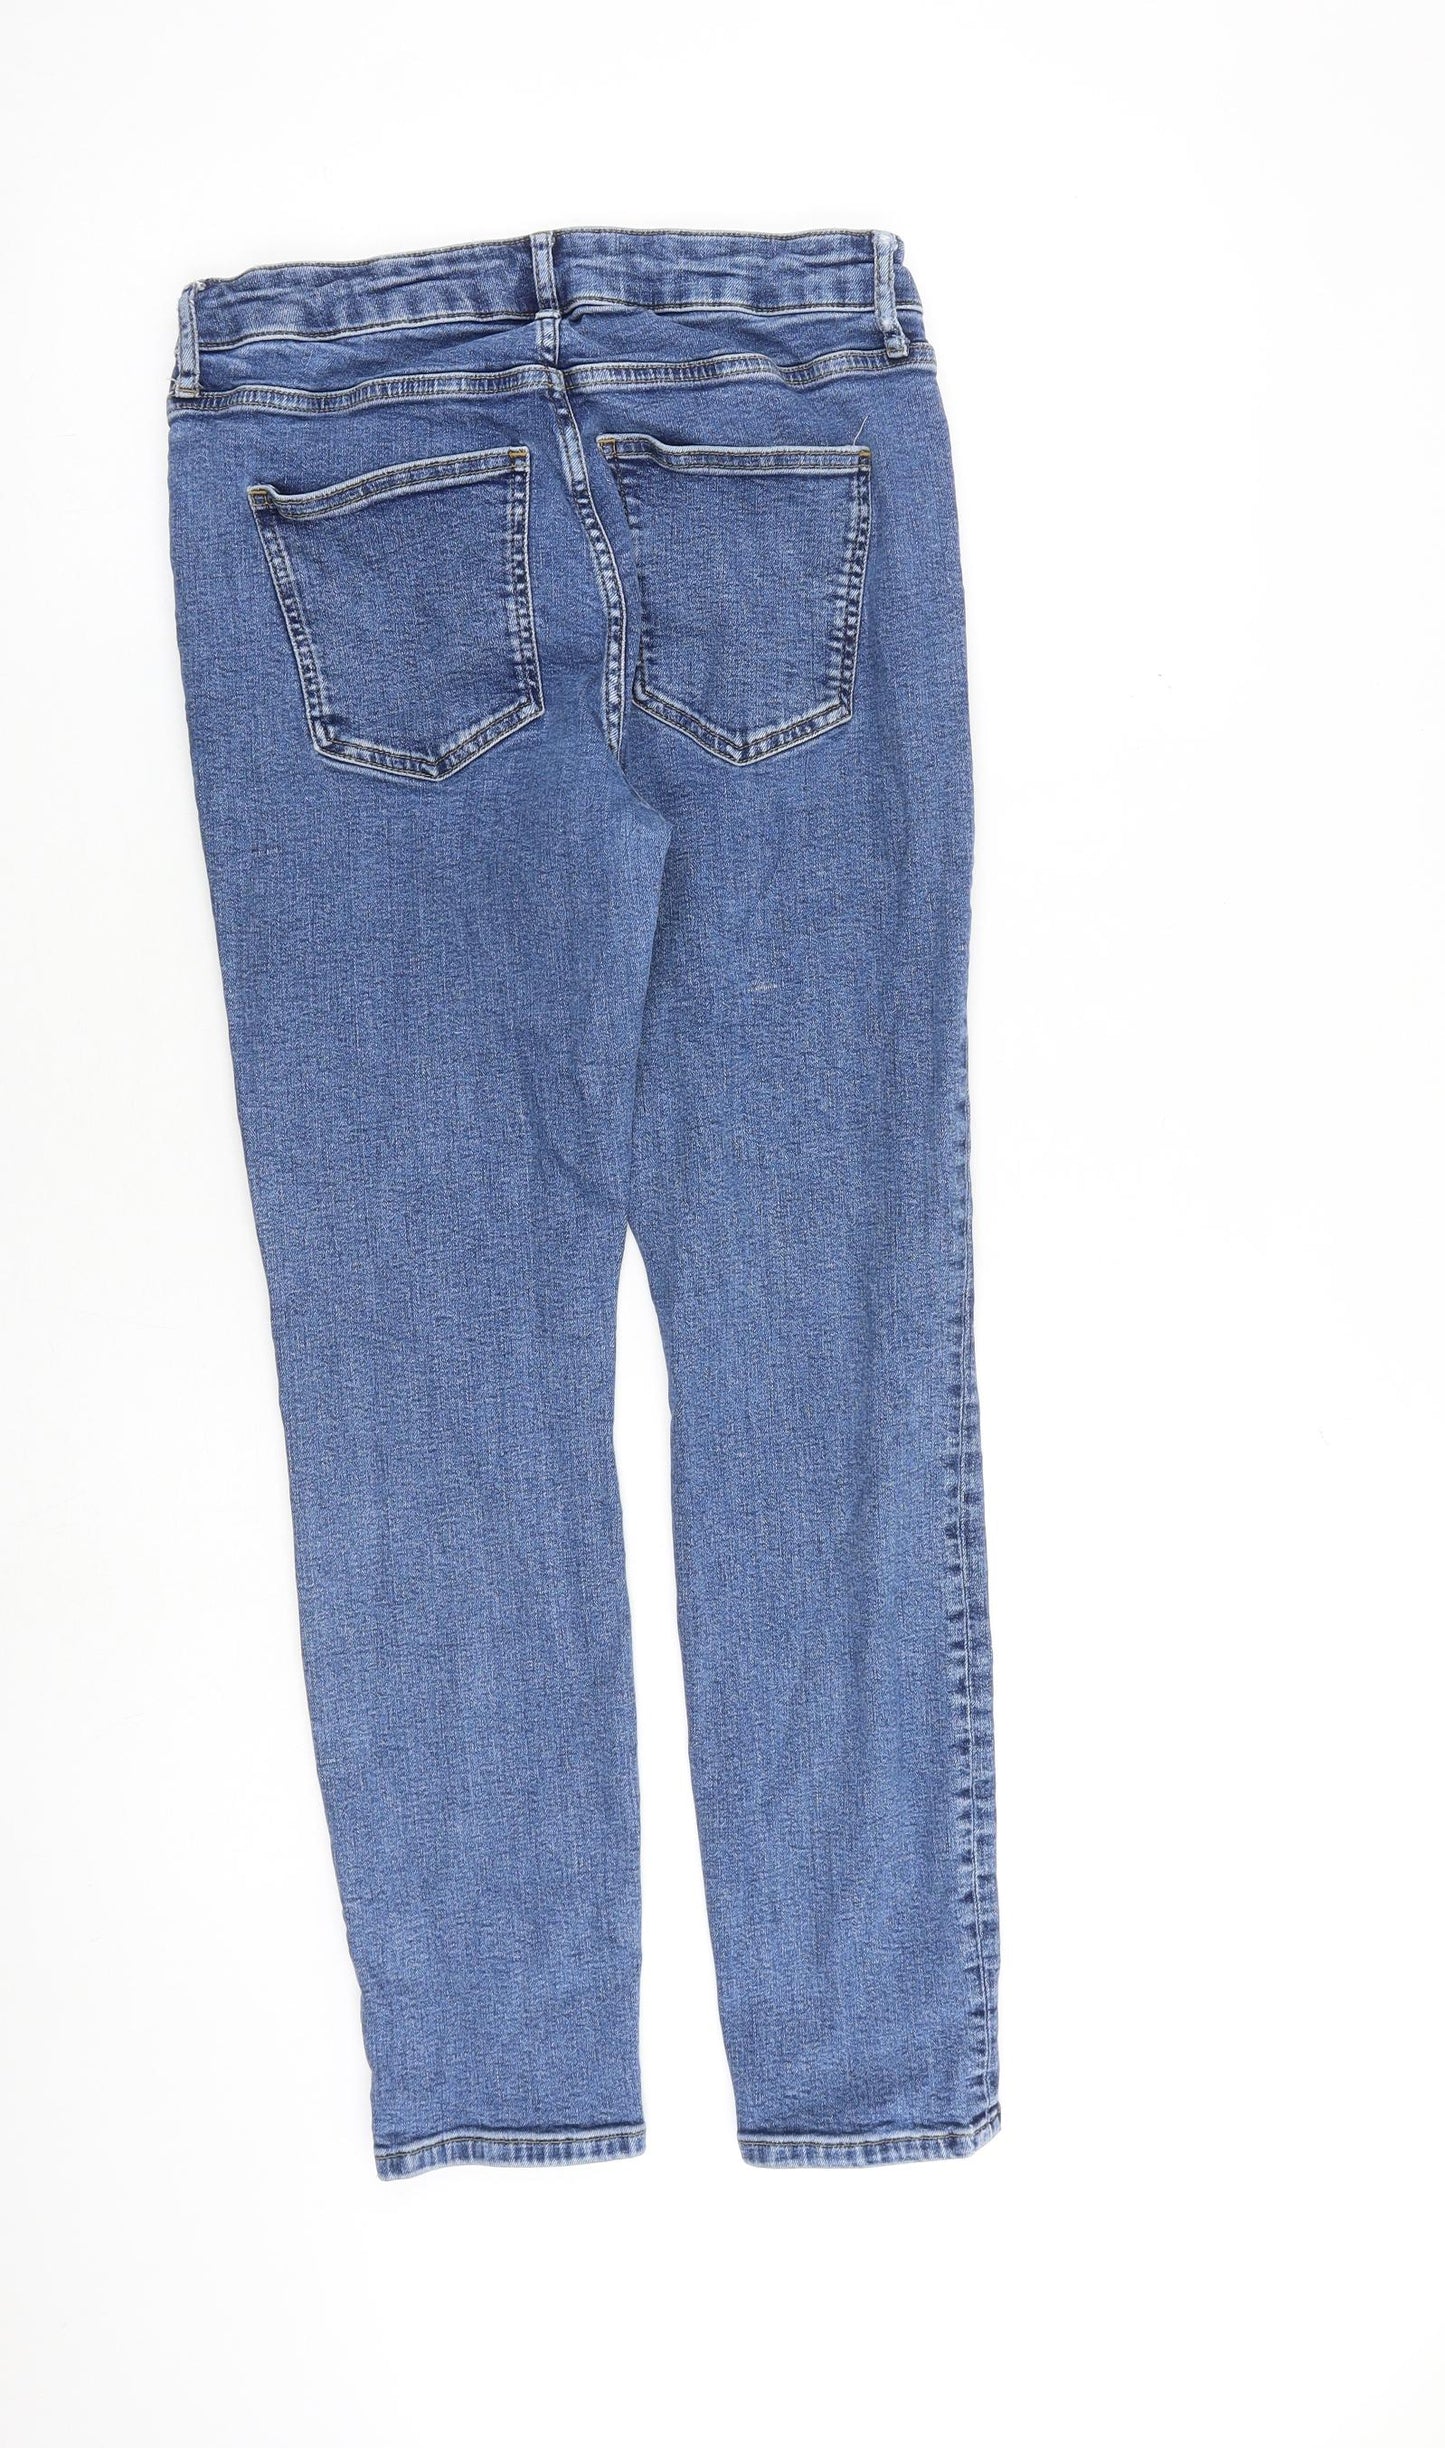 Boden Womens Blue Cotton Skinny Jeans Size 12 L27 in Regular Zip